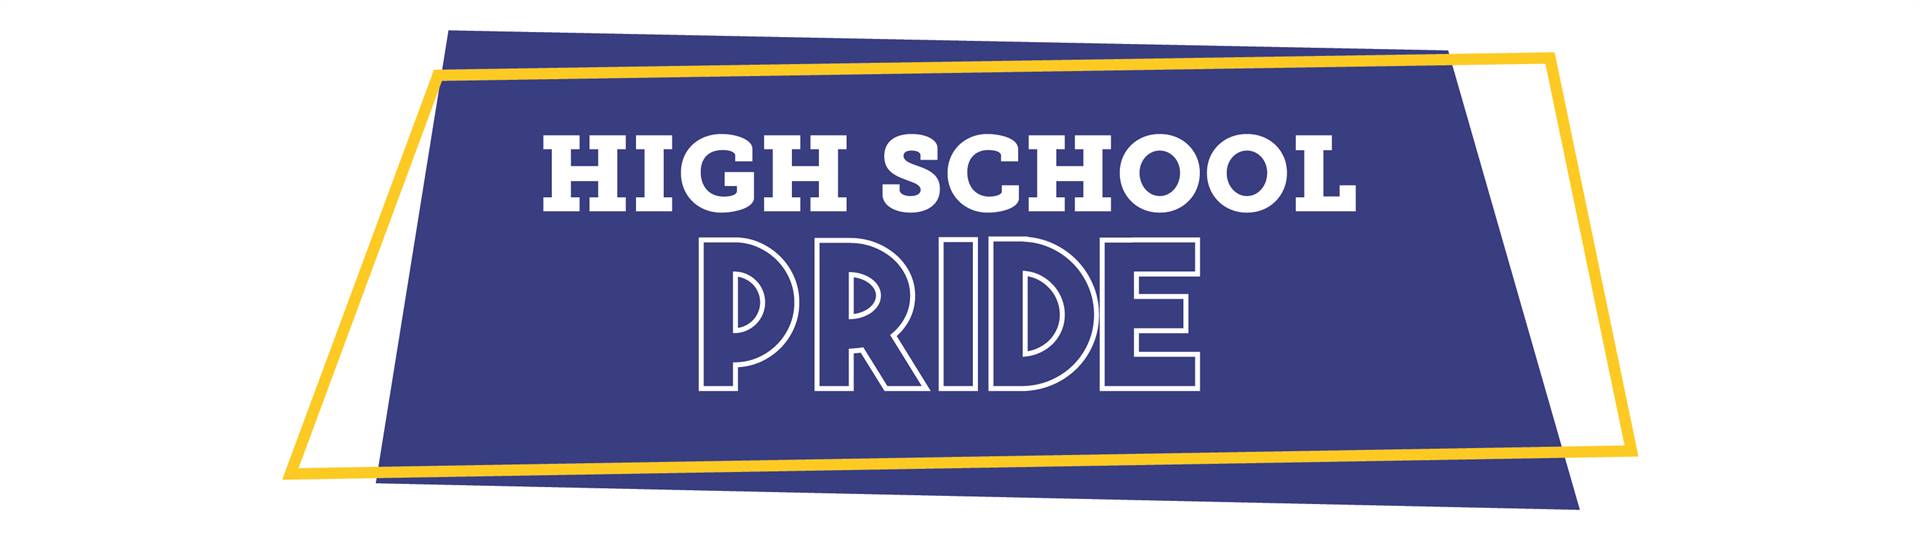 High School Pride